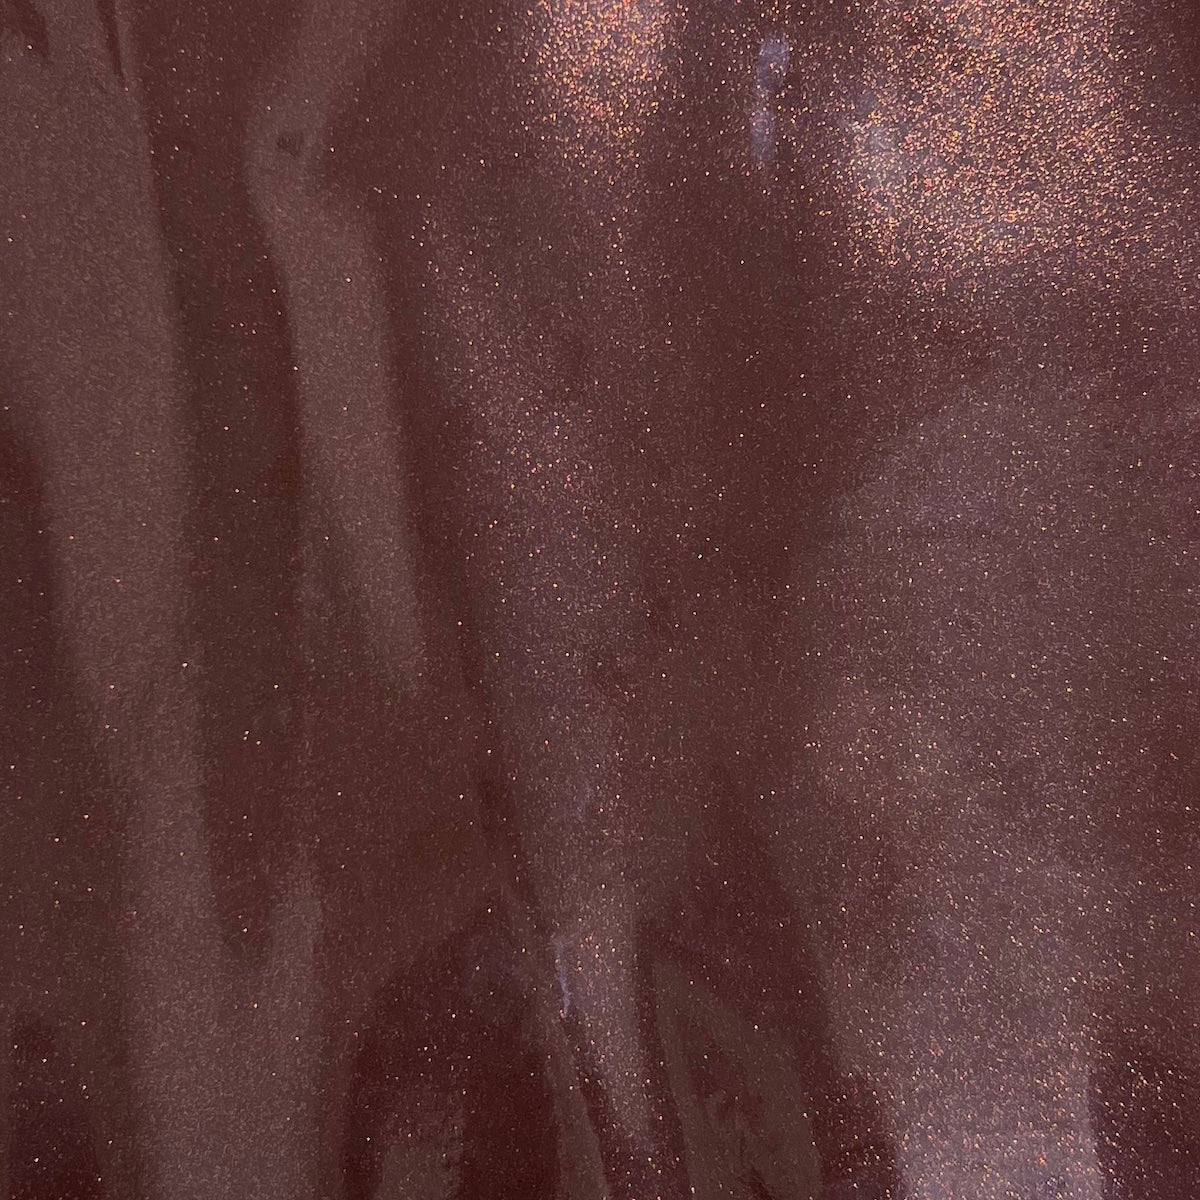 Chocolate Brown Sparkle Glitter Vinyl Fabric